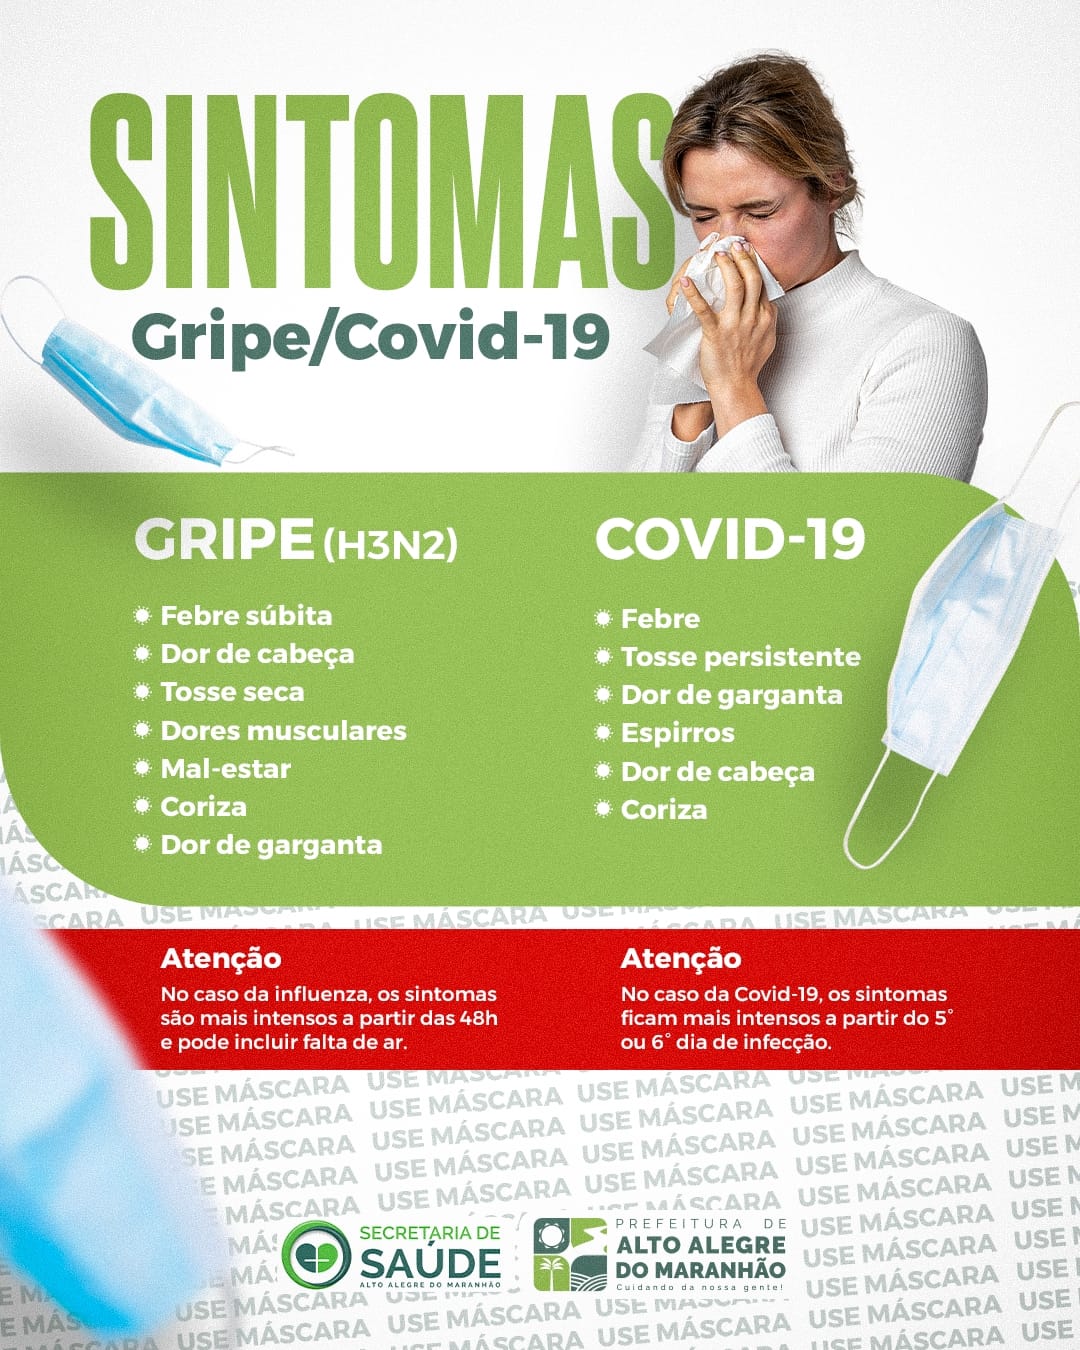 SAIBA: Sintomas Gripe/Covid-19